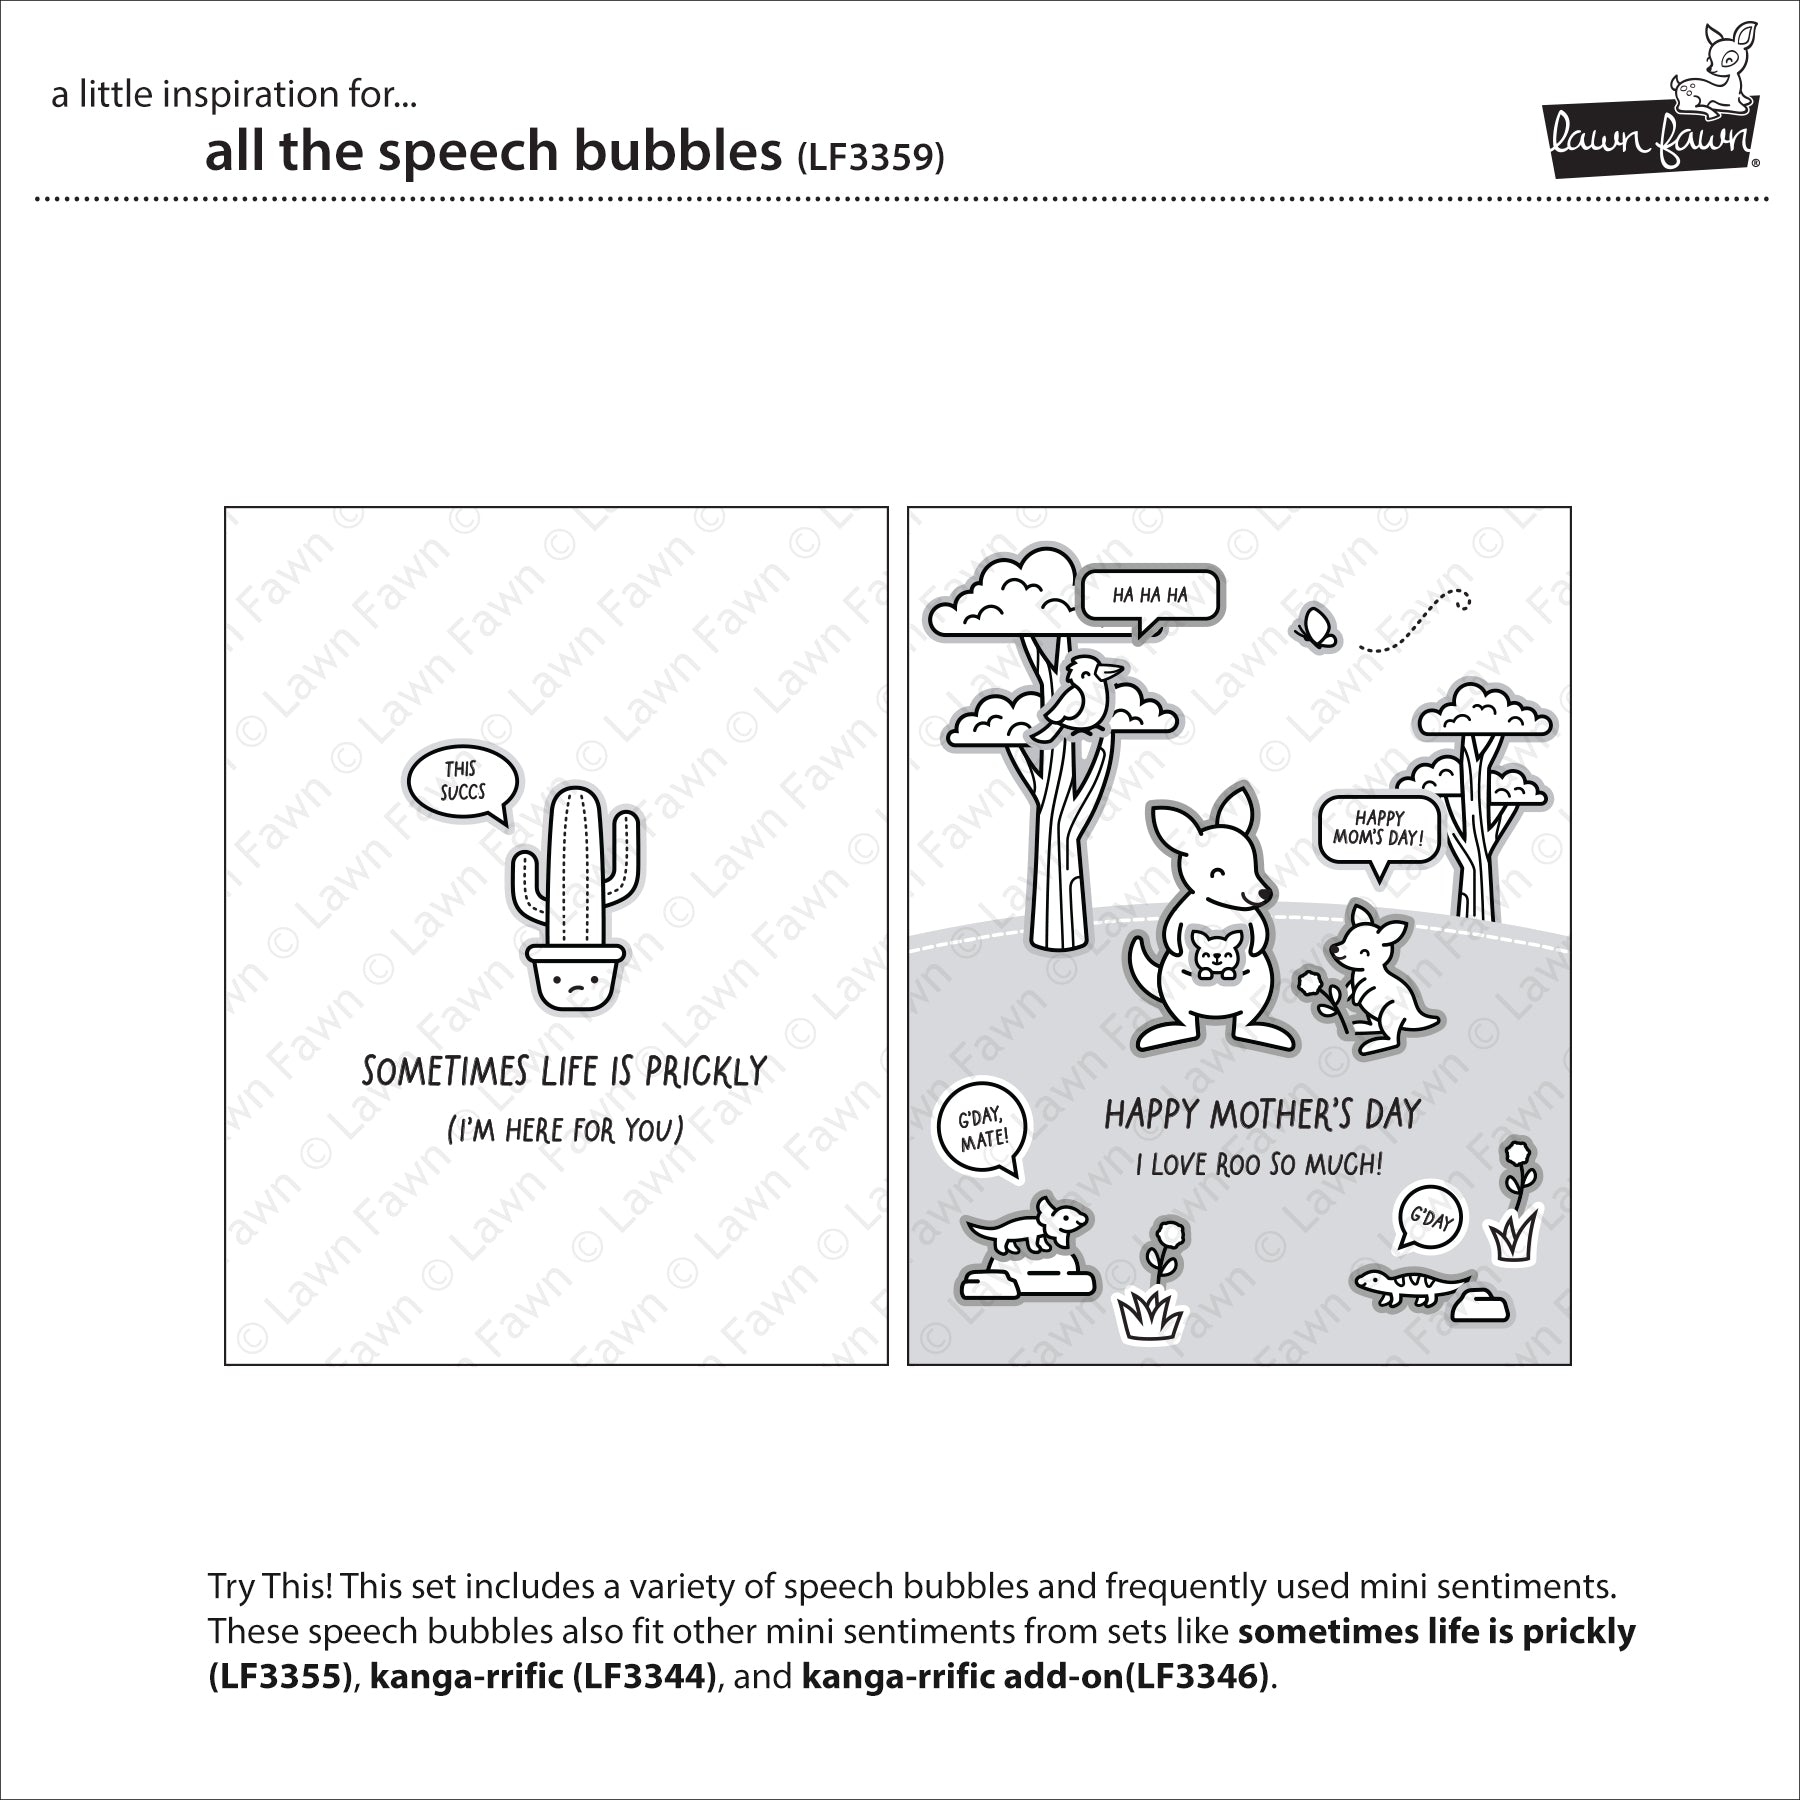 all the speech bubbles